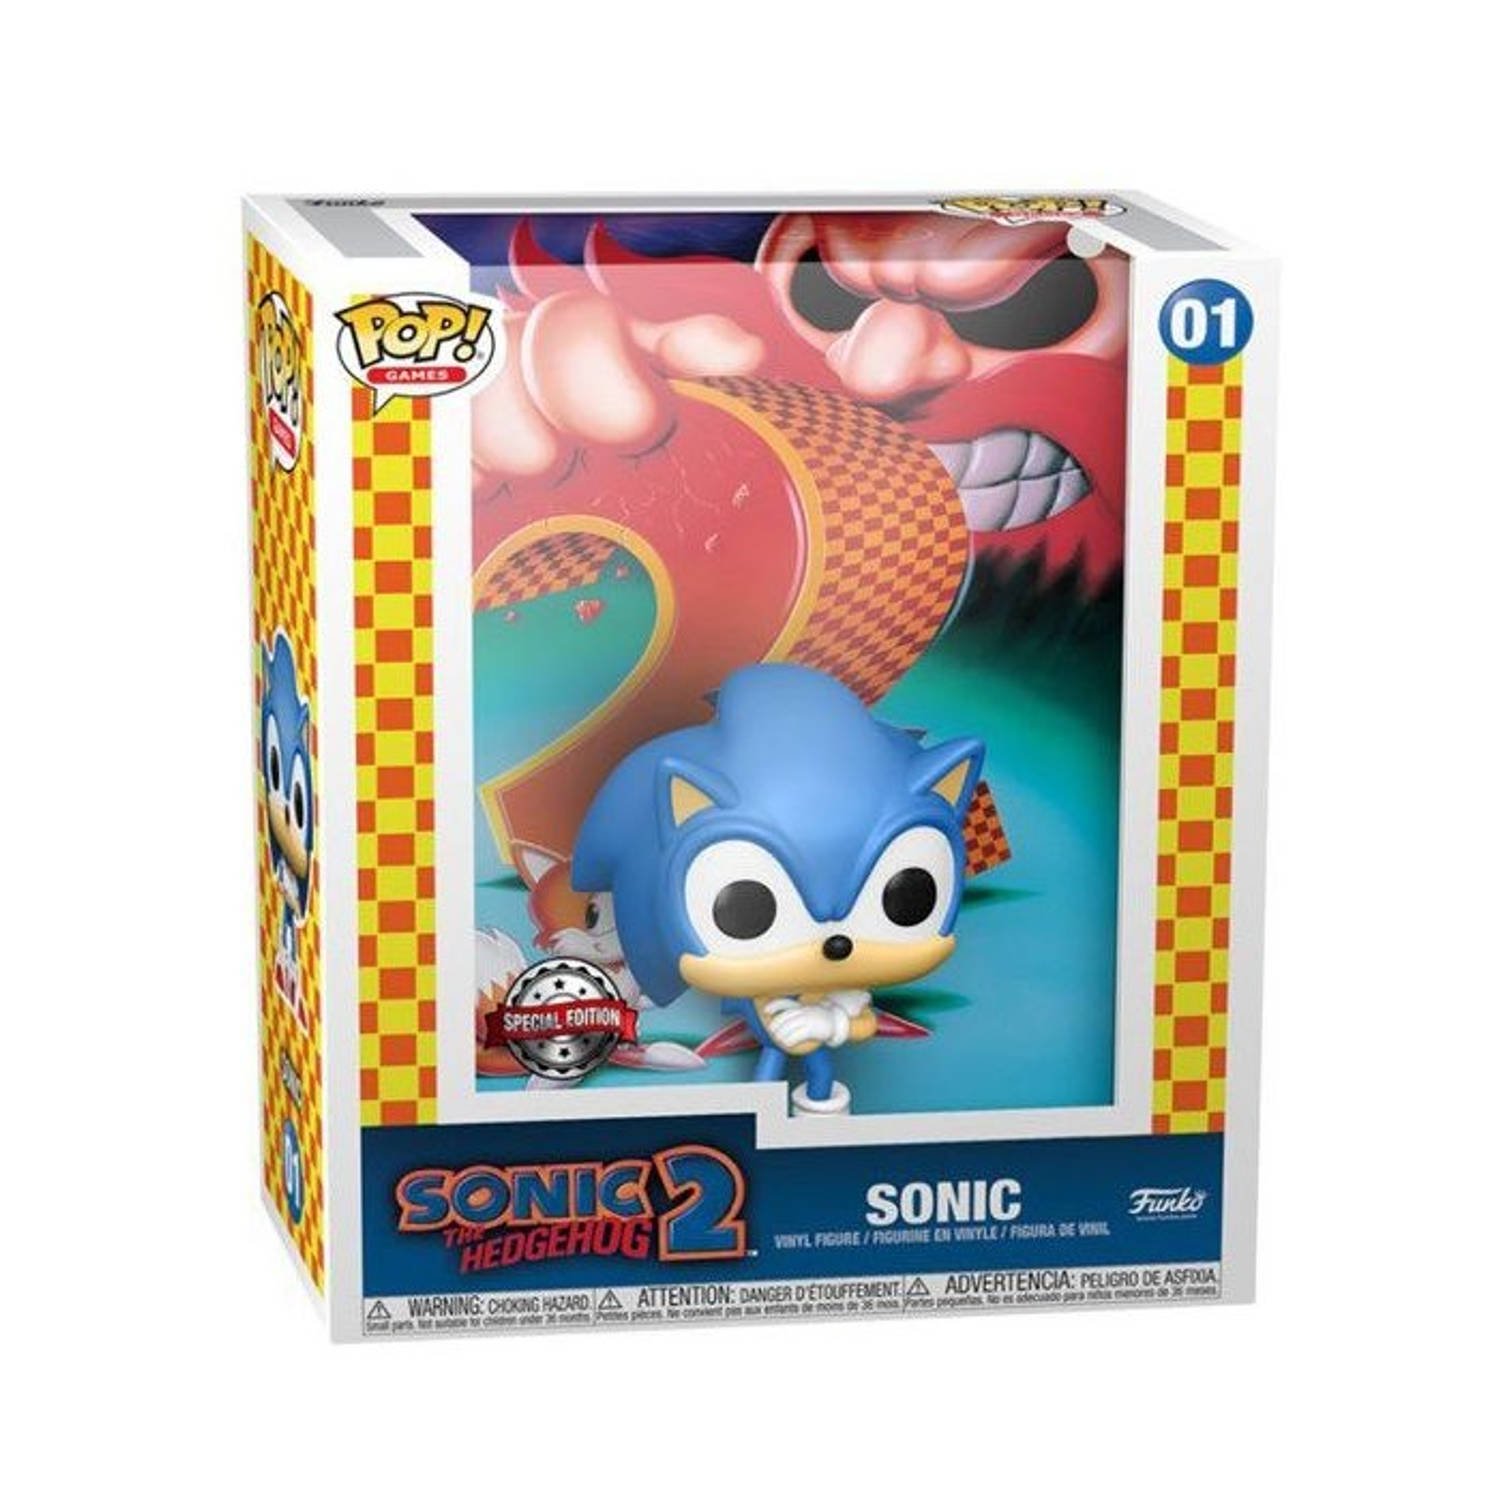 Pop Game Cover: Sonic the Hedgehog 2 Funko Pop #01